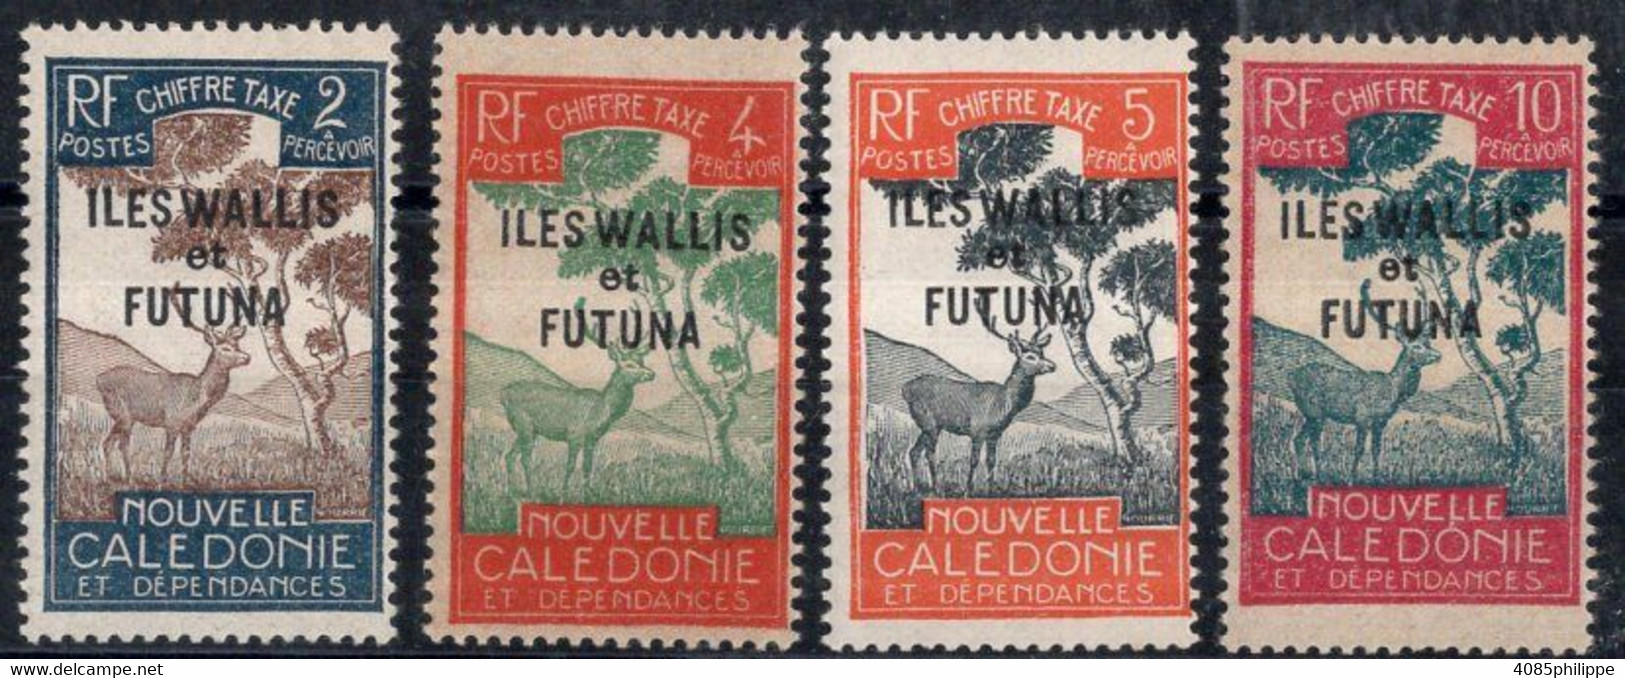 Wallis & Futuna Timbres-Taxe N°11 à 14** Neufs Sans Charnières TB Cote 3.50€ - Postage Due